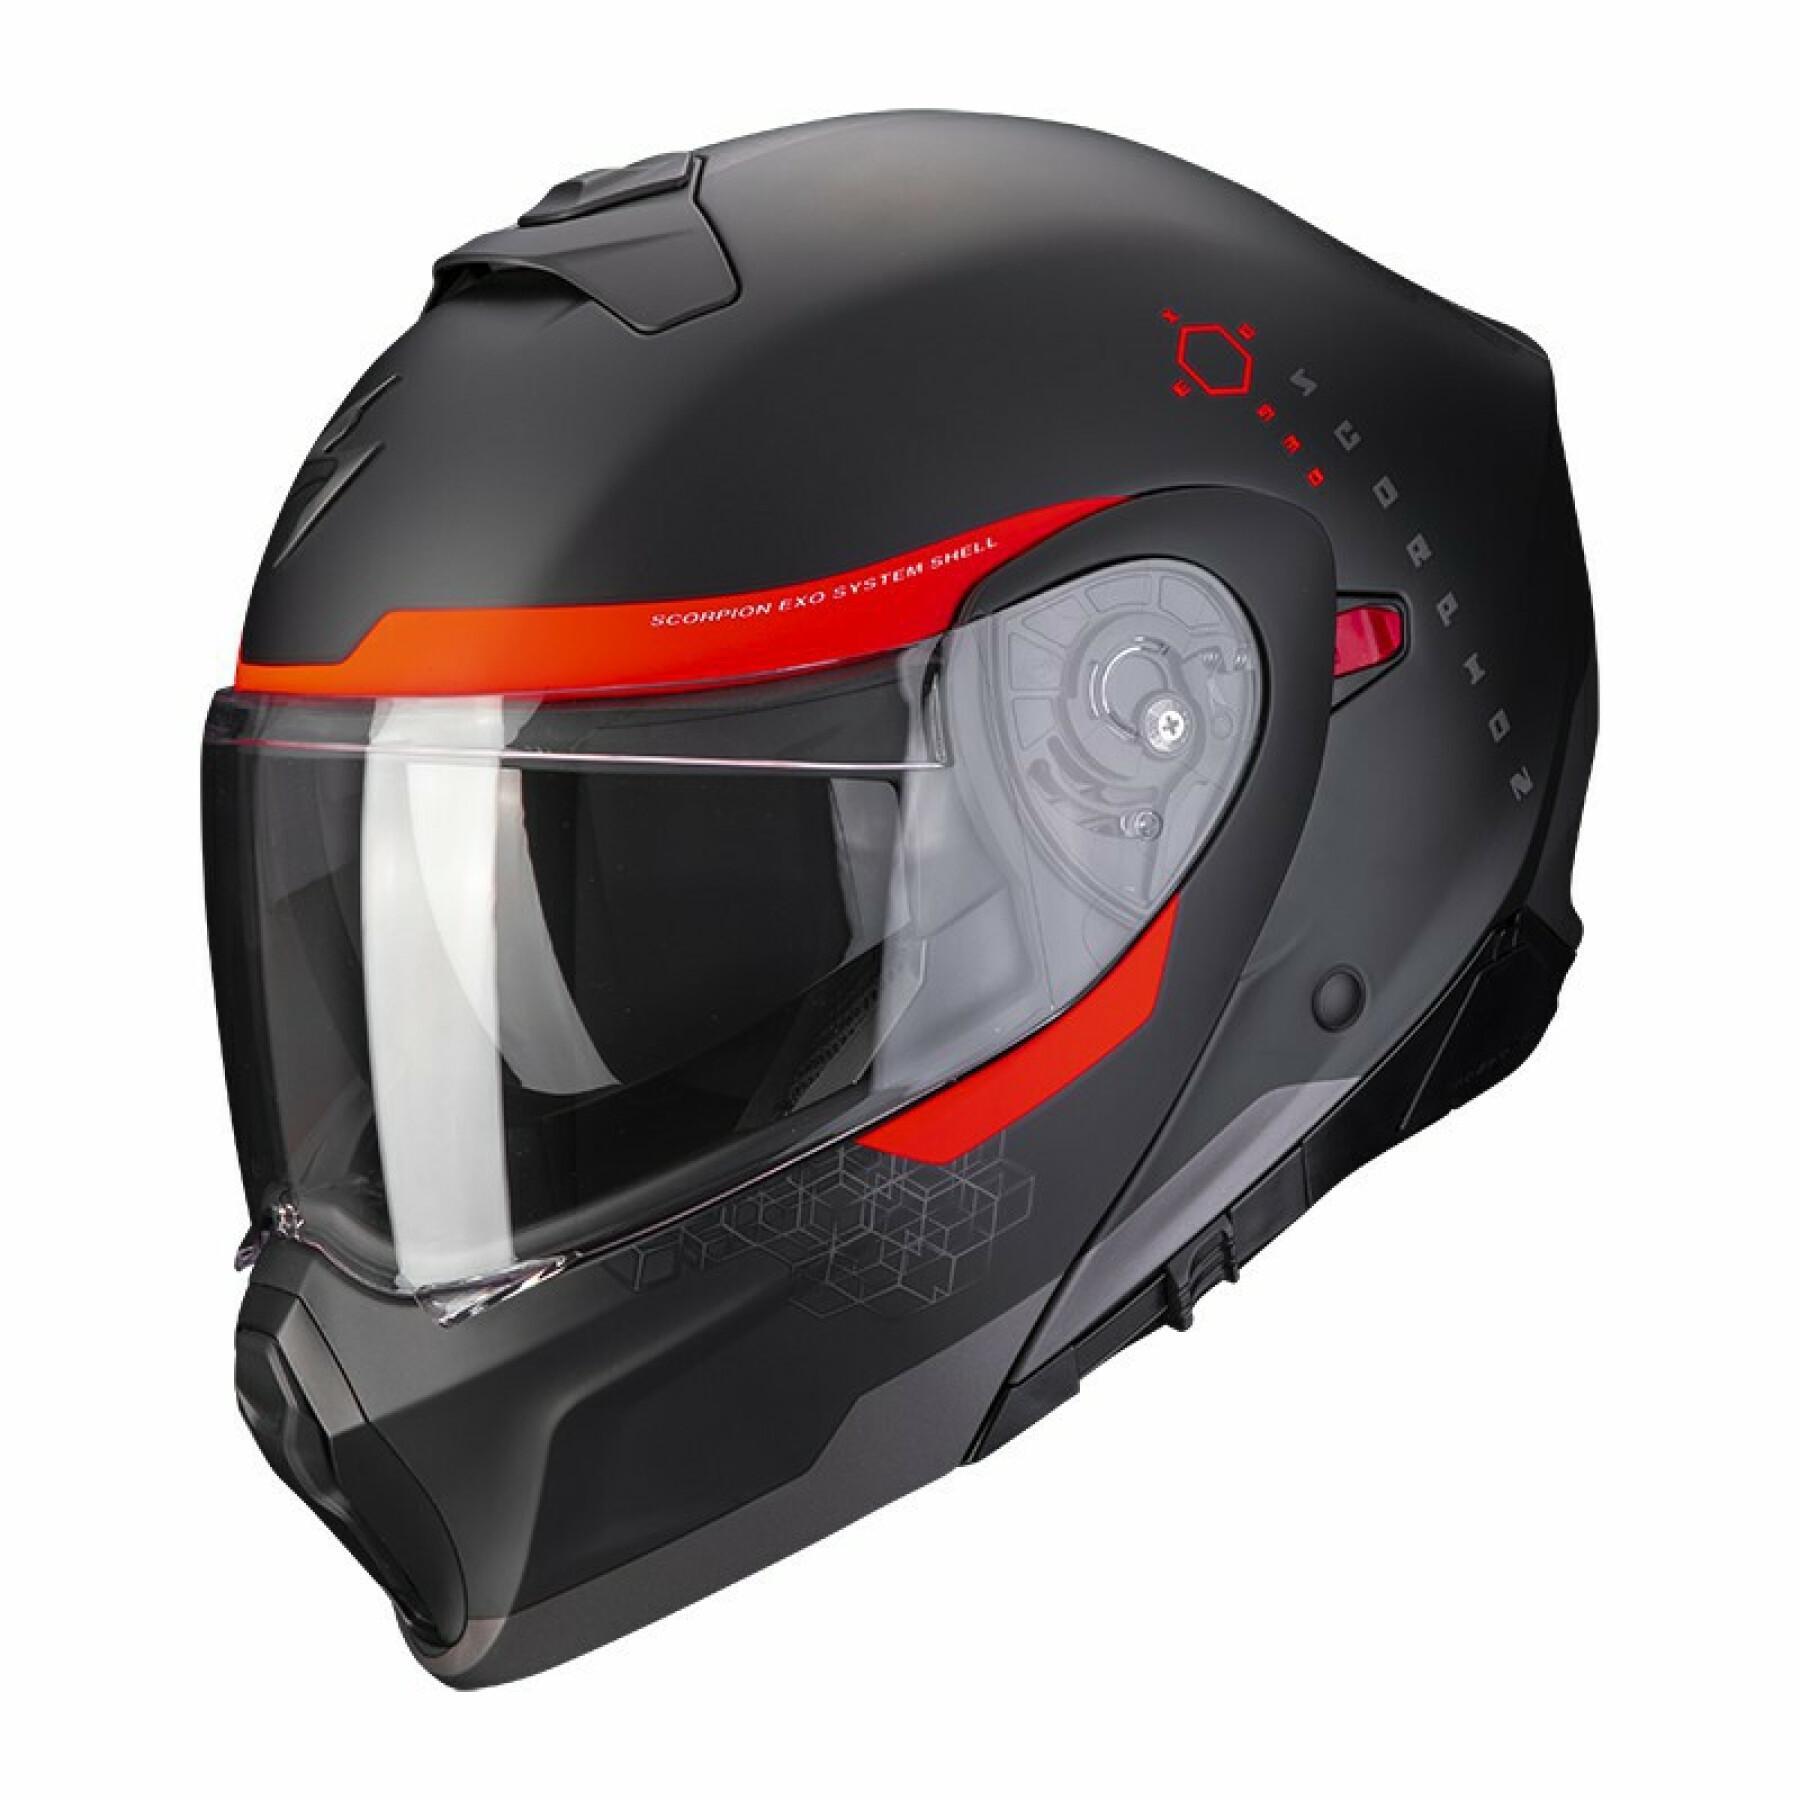 Modular helmet Scorpion Exo-930 SHOT